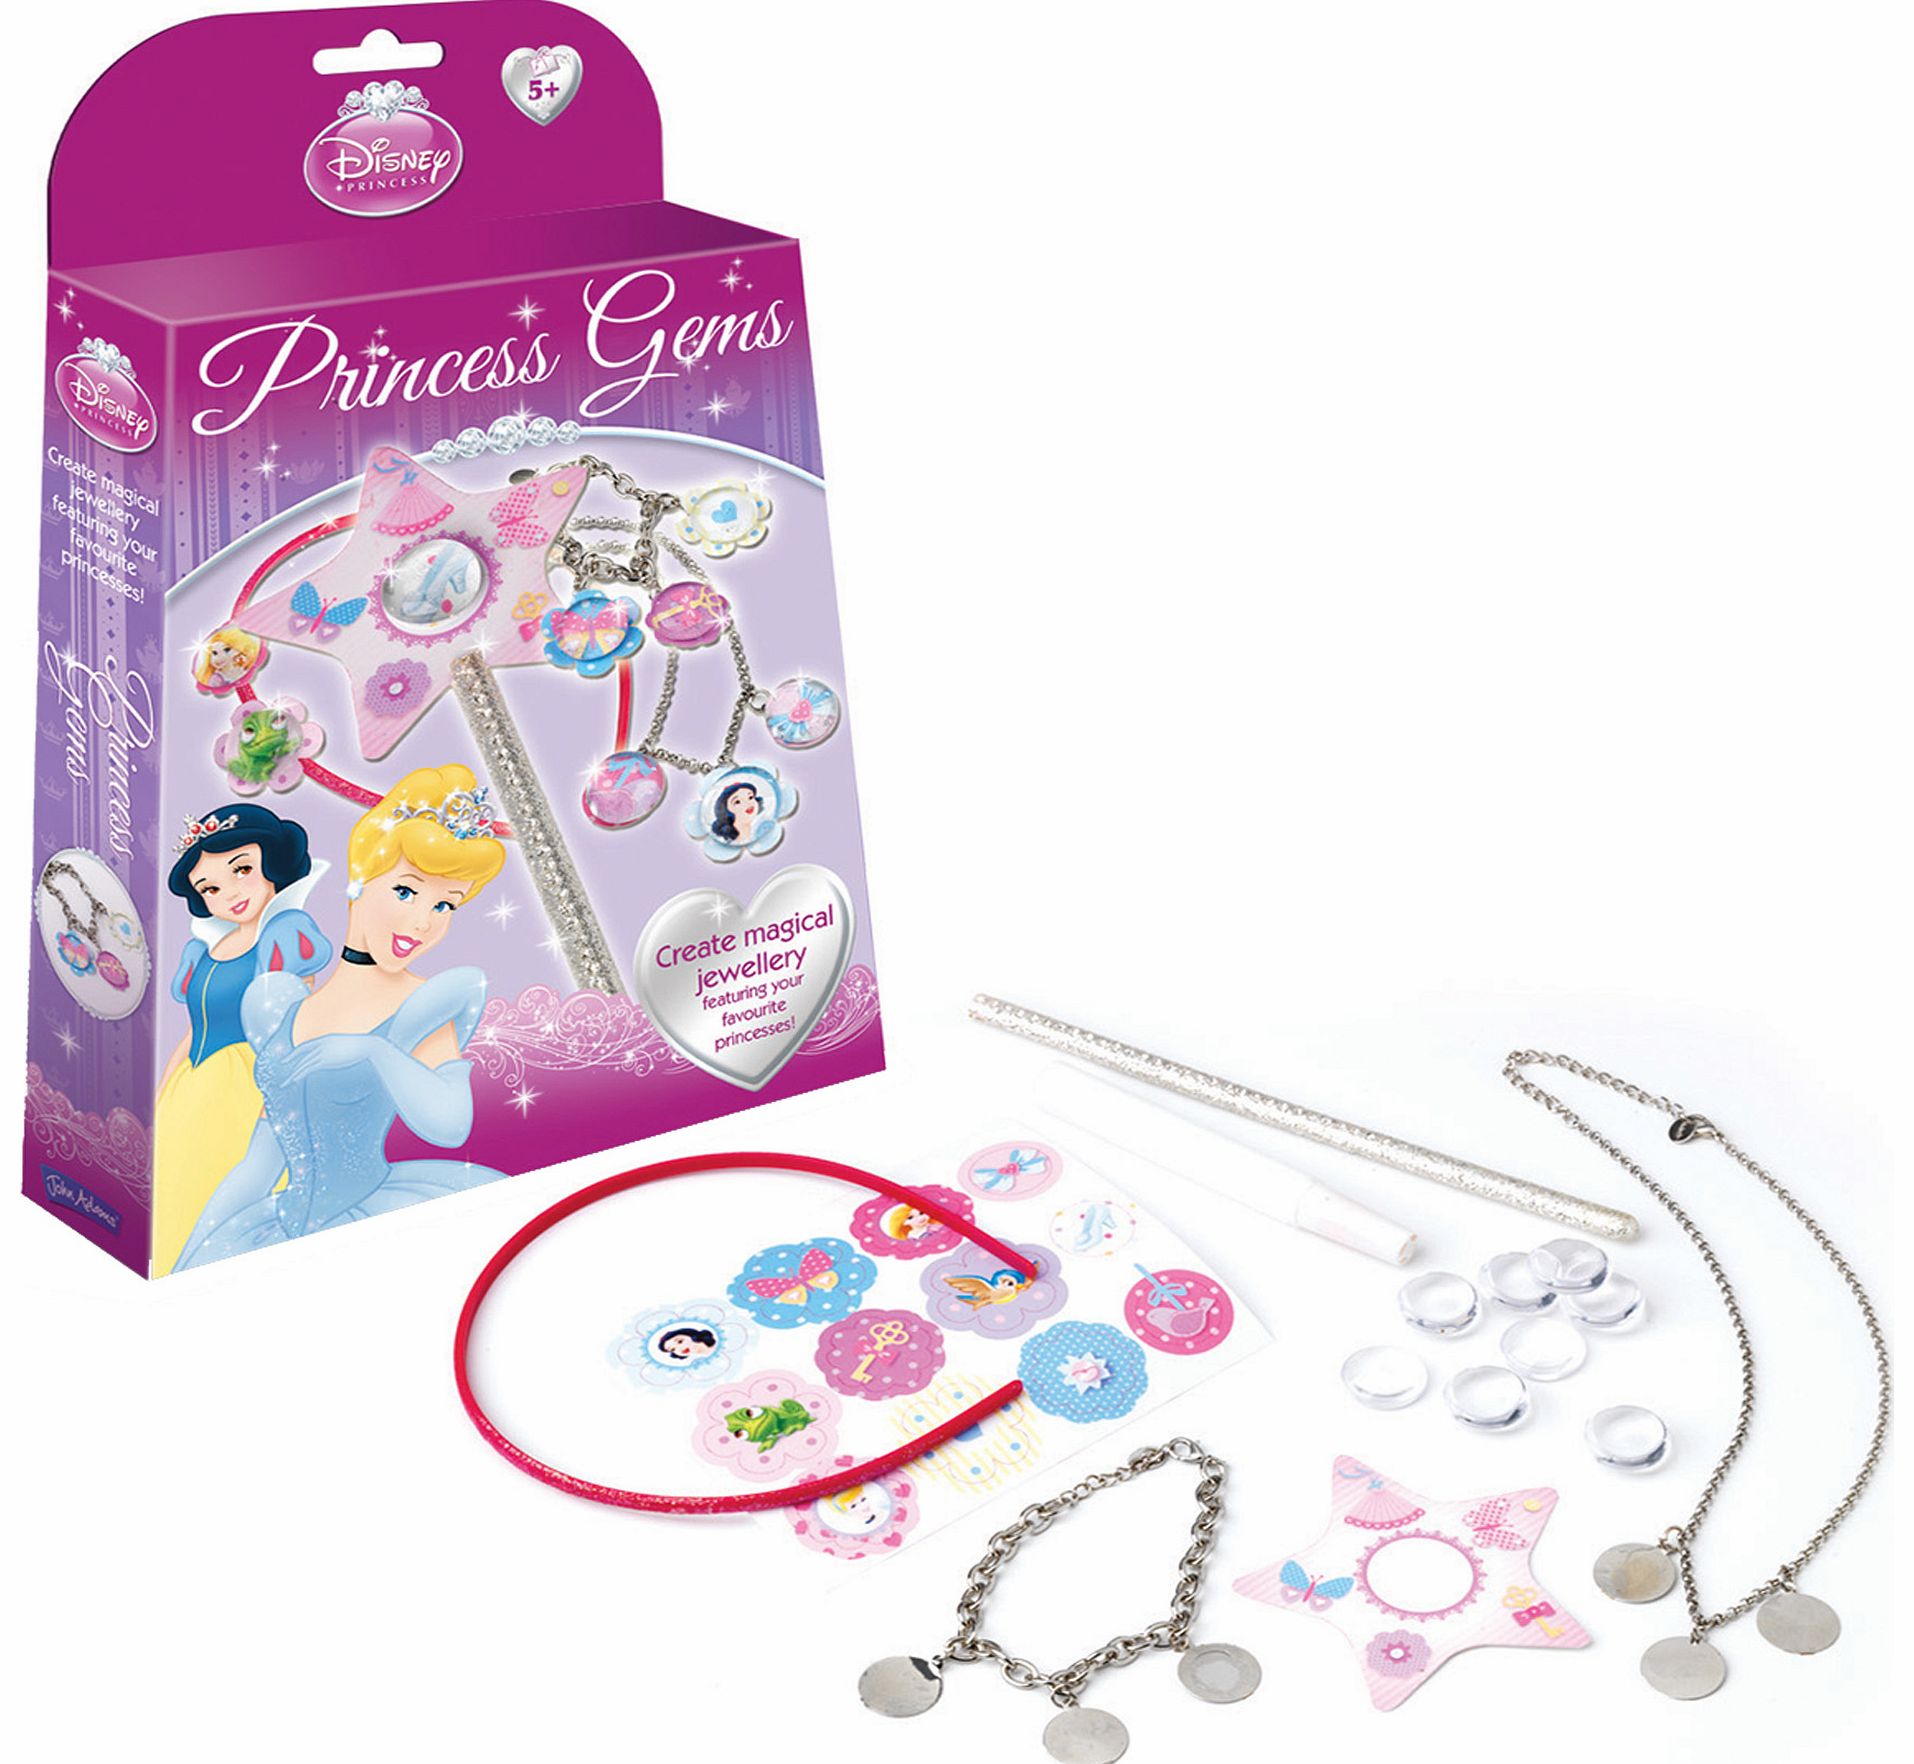 Disney Princess Gems